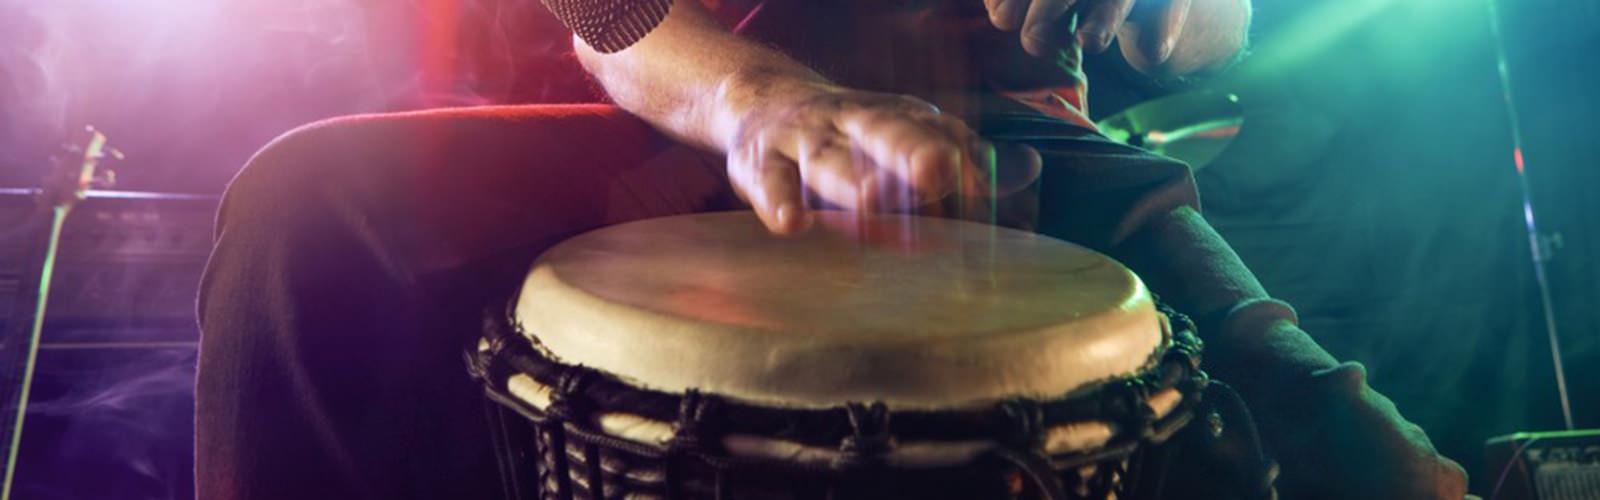 bongo drums ibiza